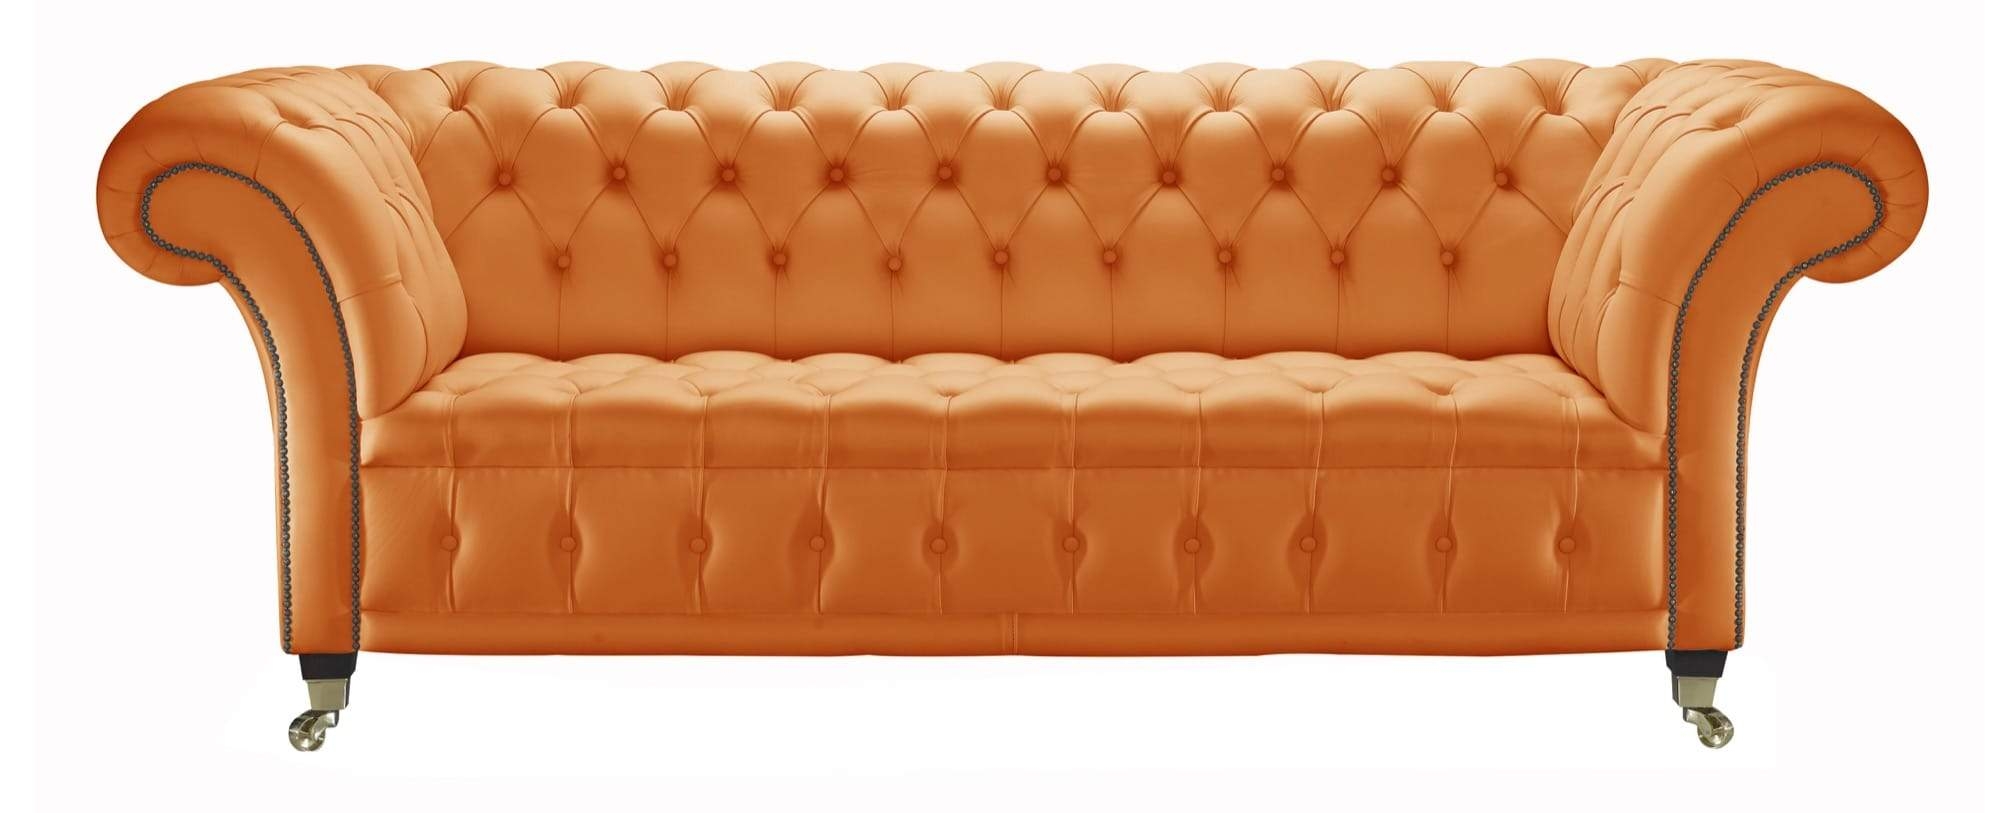 Portabello – Venetia Chesterfield Sofa – Orange House Leather 2 Seater – High Quality Leather – Orange – Chesterfield – 2 Seater 183 X 83 X 88 cm